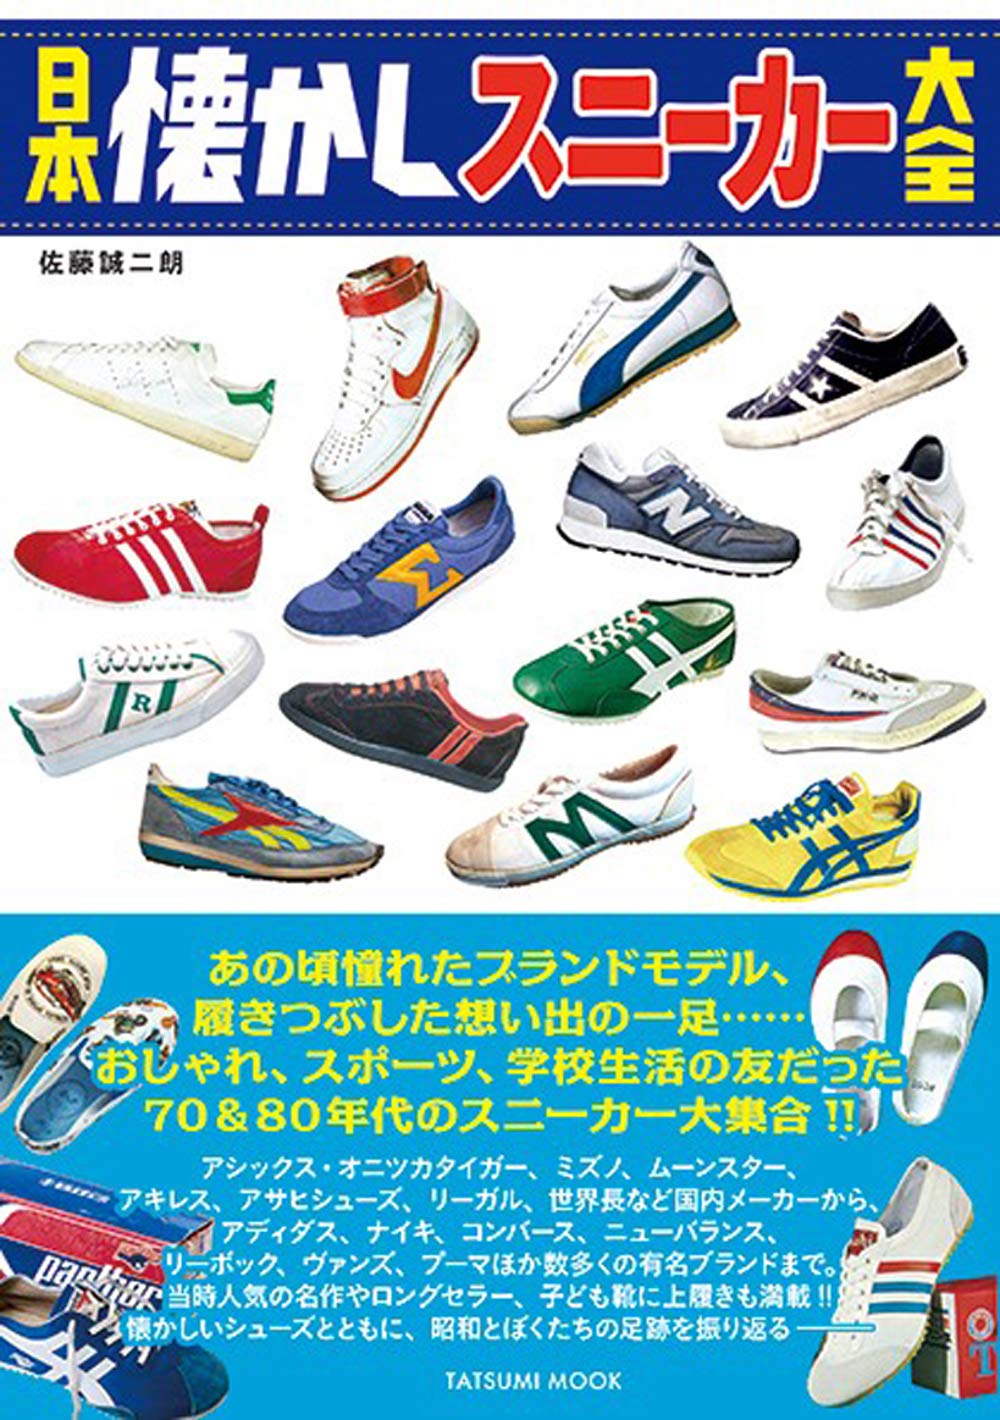 Japanese classic Sneaker catalog